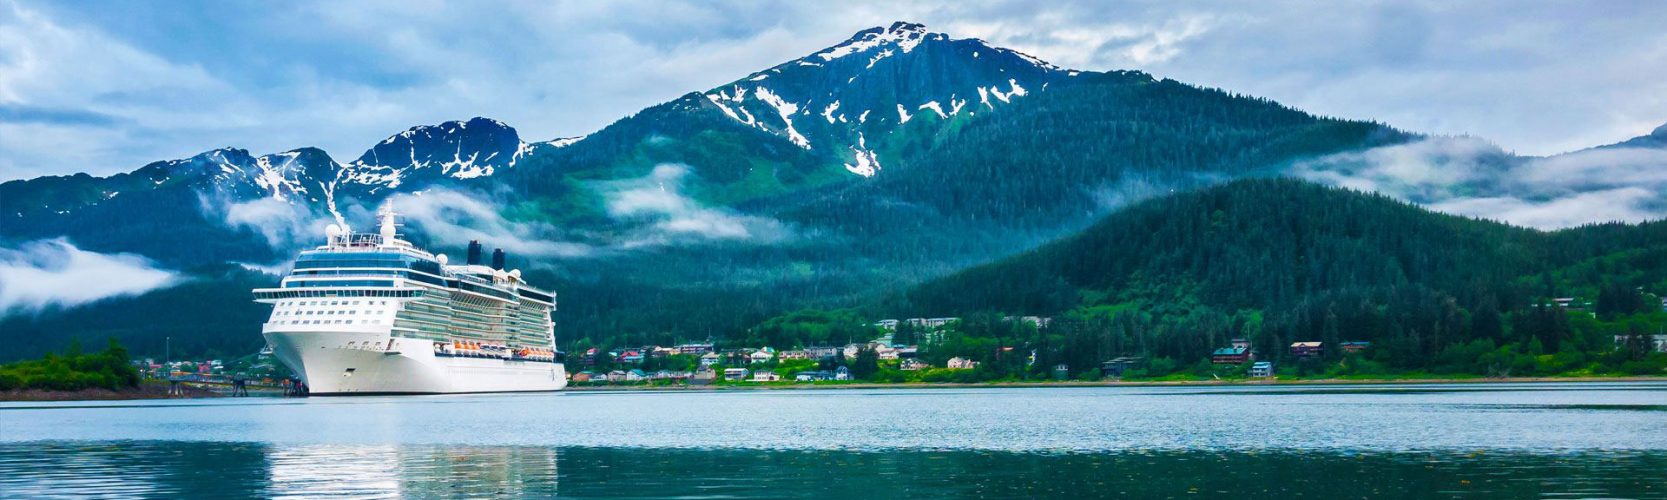 The Truss - Alaskan Cruise 2016